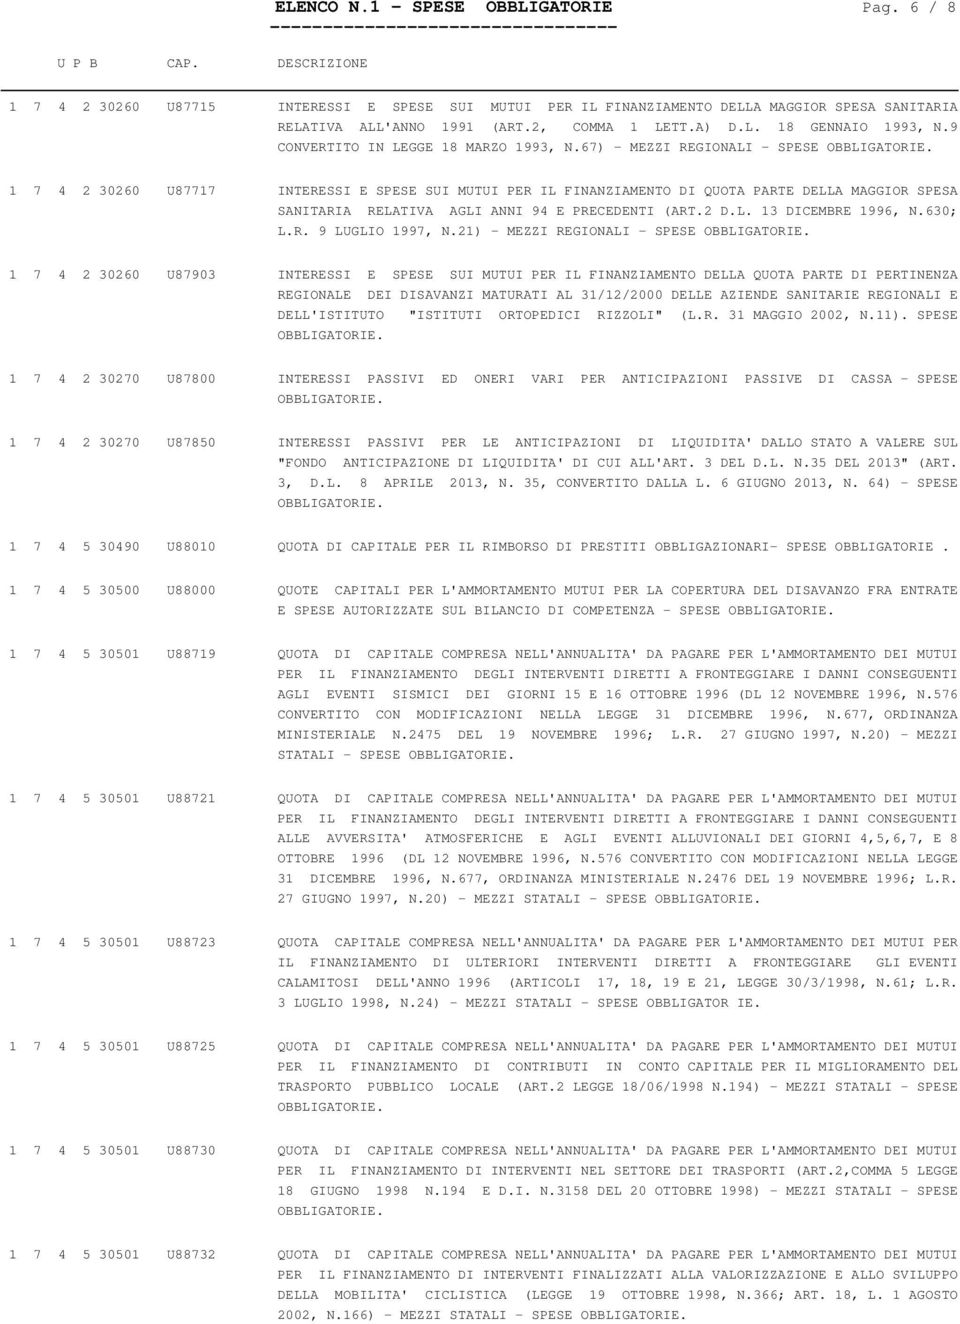 9 CONVERTITO IN LEGGE 18 MARZO 1993, N.67) - MEZZI REGIONALI - SPESE OBBLIGATORIE.